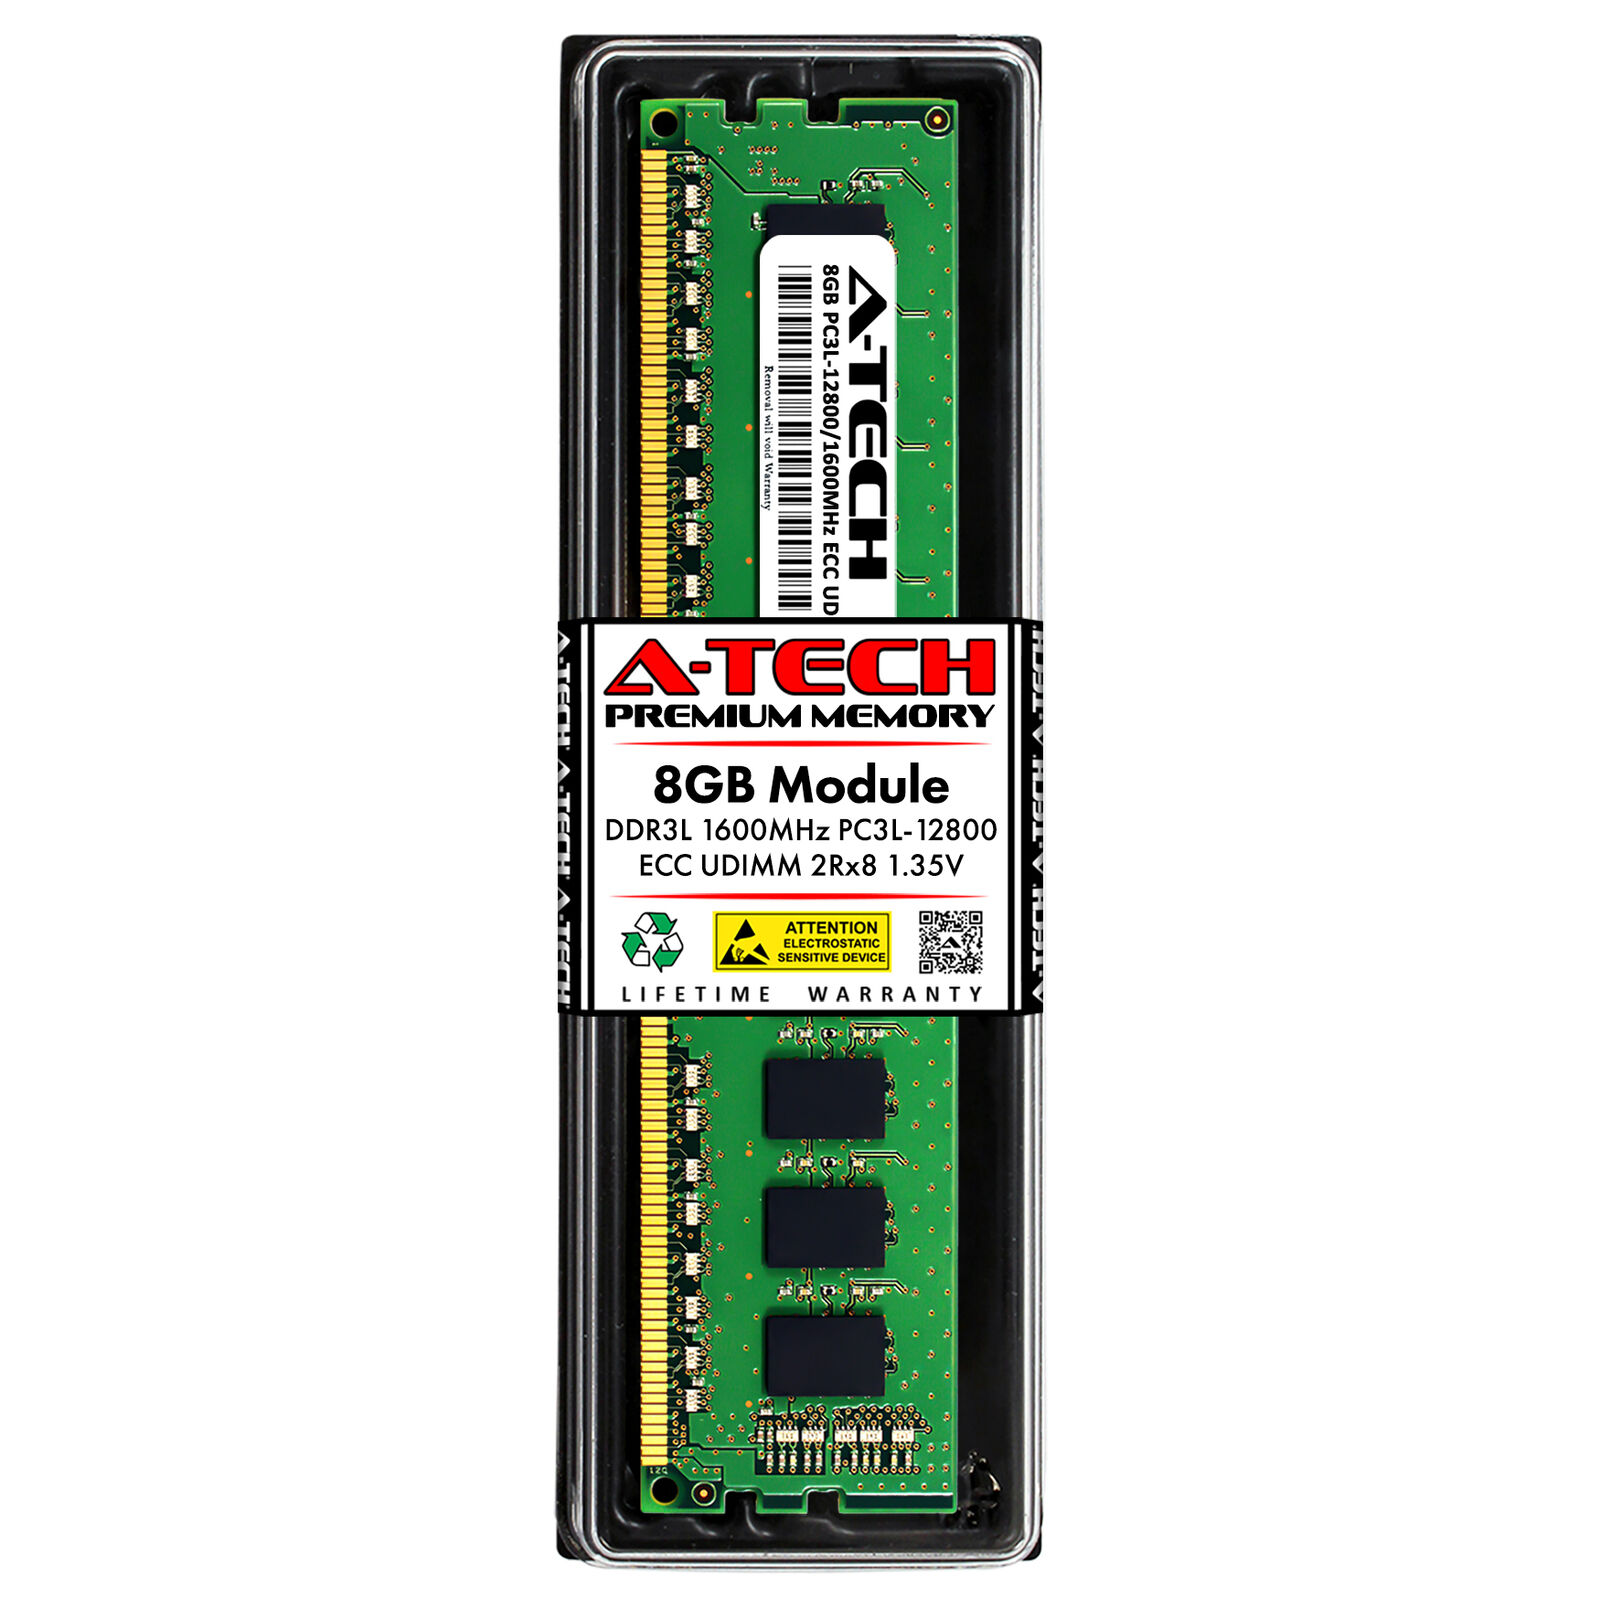 8GB PC3L-12800E ECC UDIMM (Samsung M391B1G73BH0-YK0 Equivalent) Memory RAM